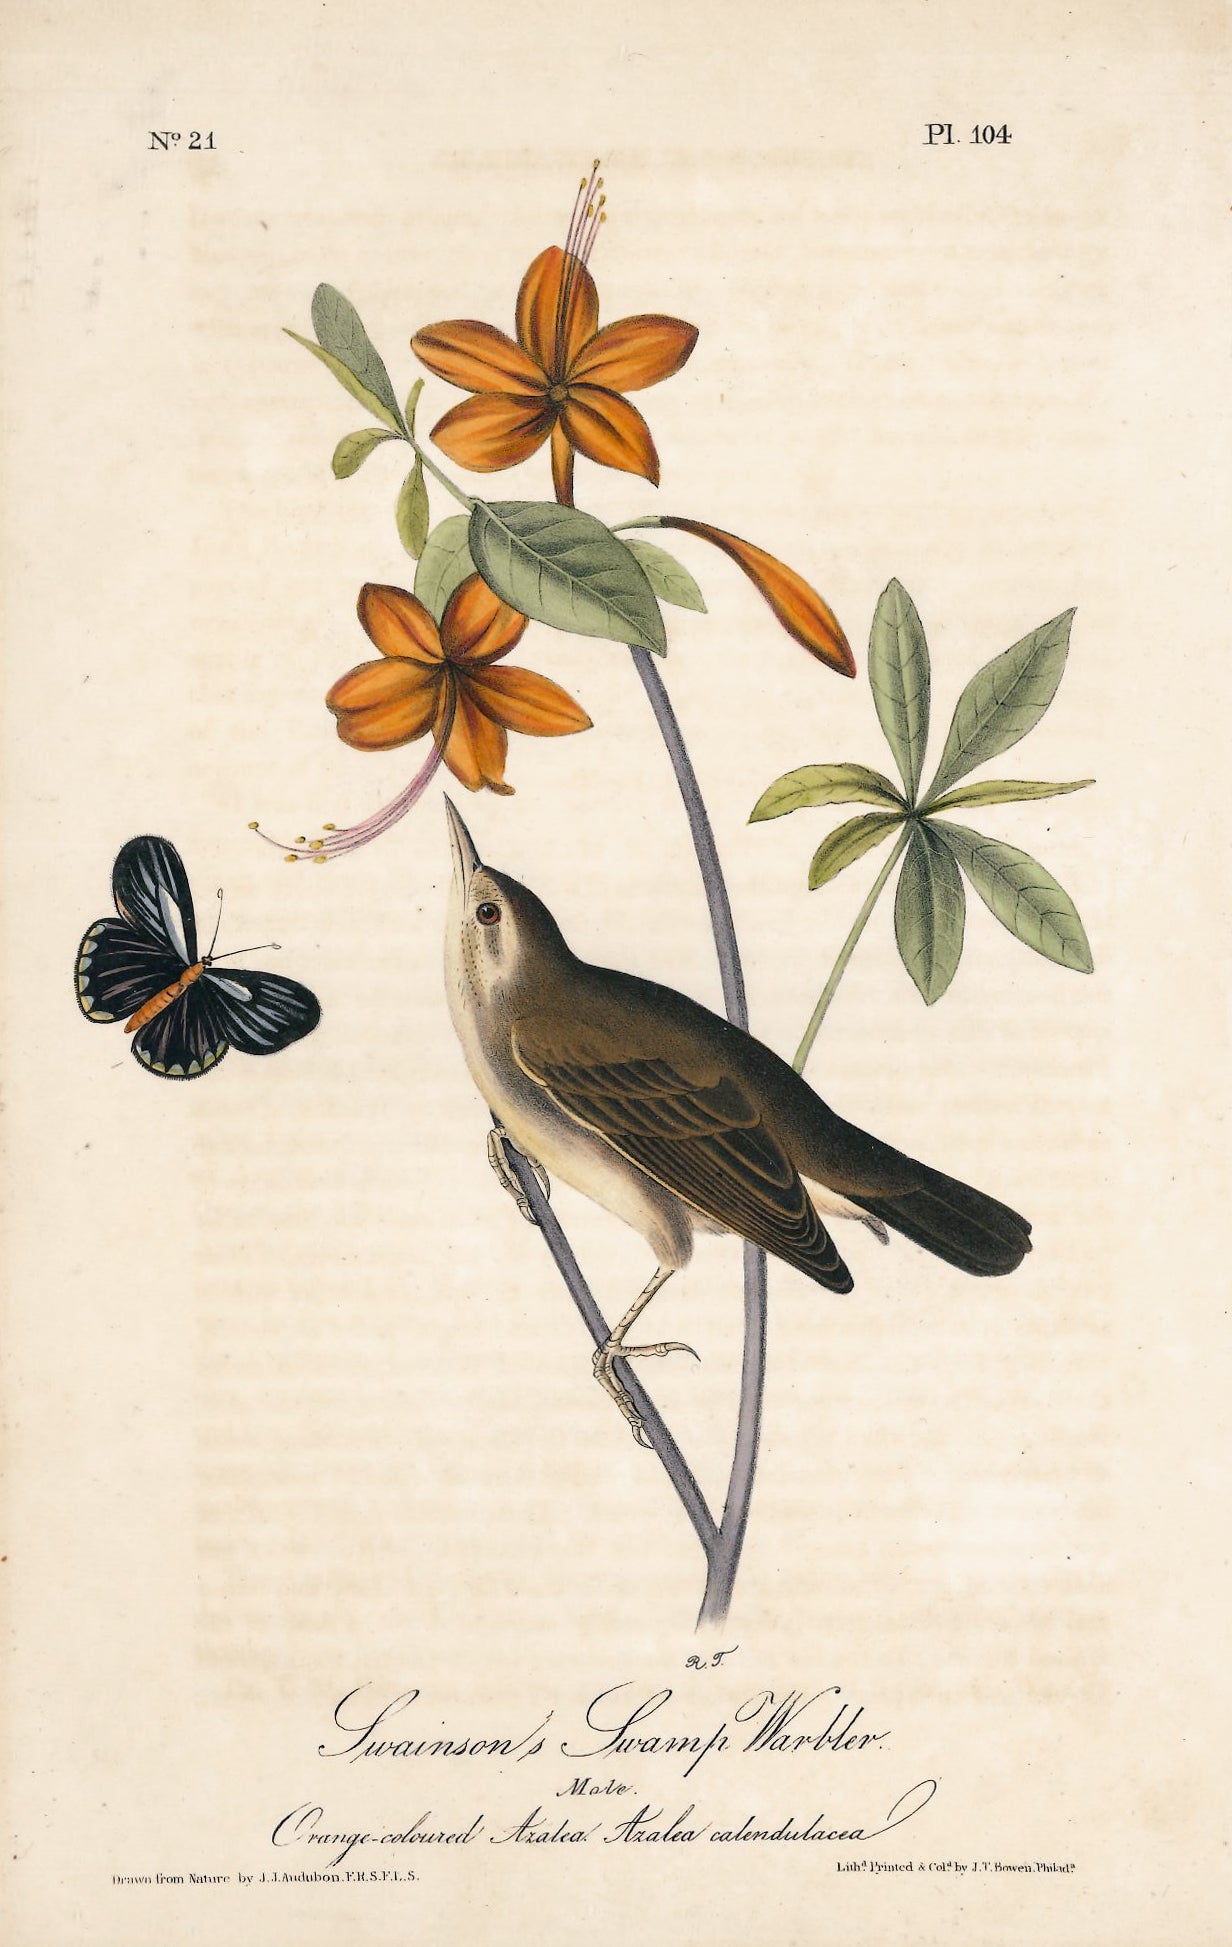 AUDUBON, John James (1785 - 1851), Swainson's Swamp Warbler (Plate 104), 1839-1844